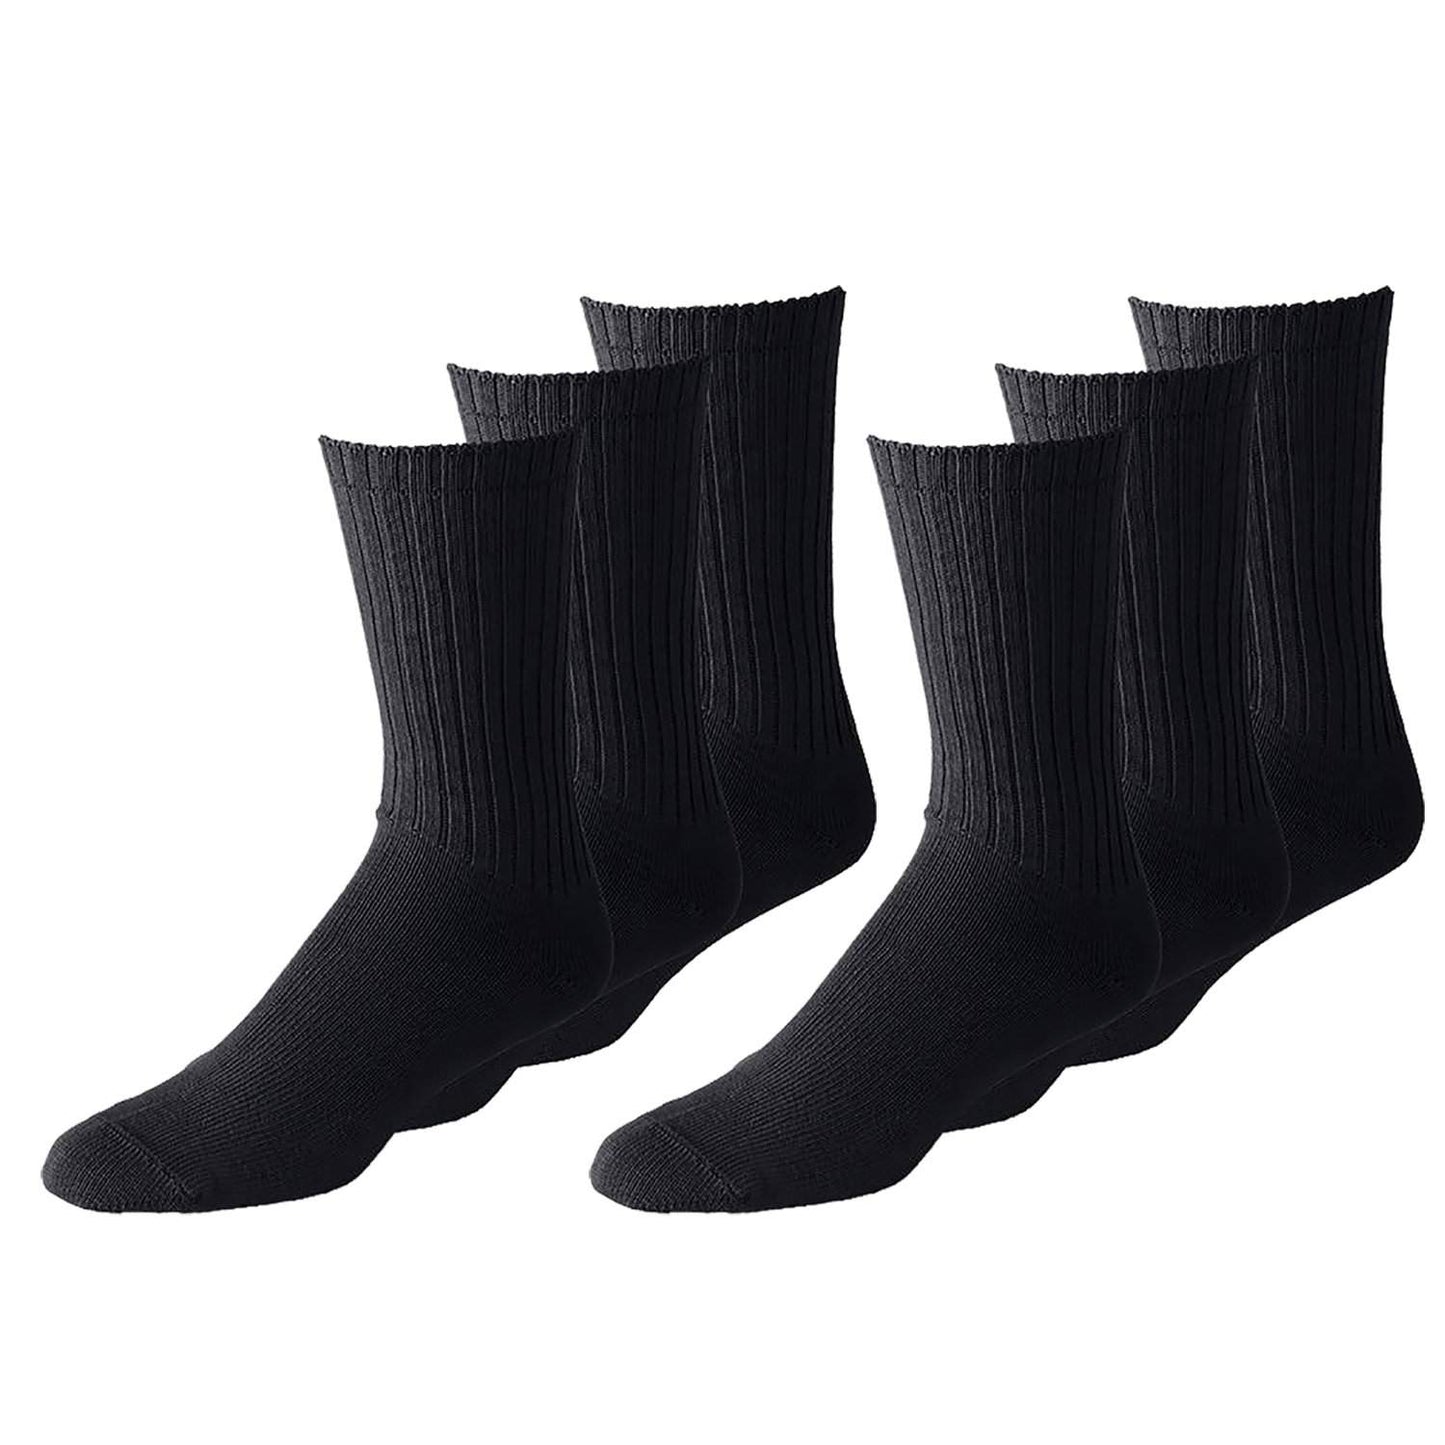 Daily Basic Unisex Crew Athletic Sports Cotton Socks  36 Pack